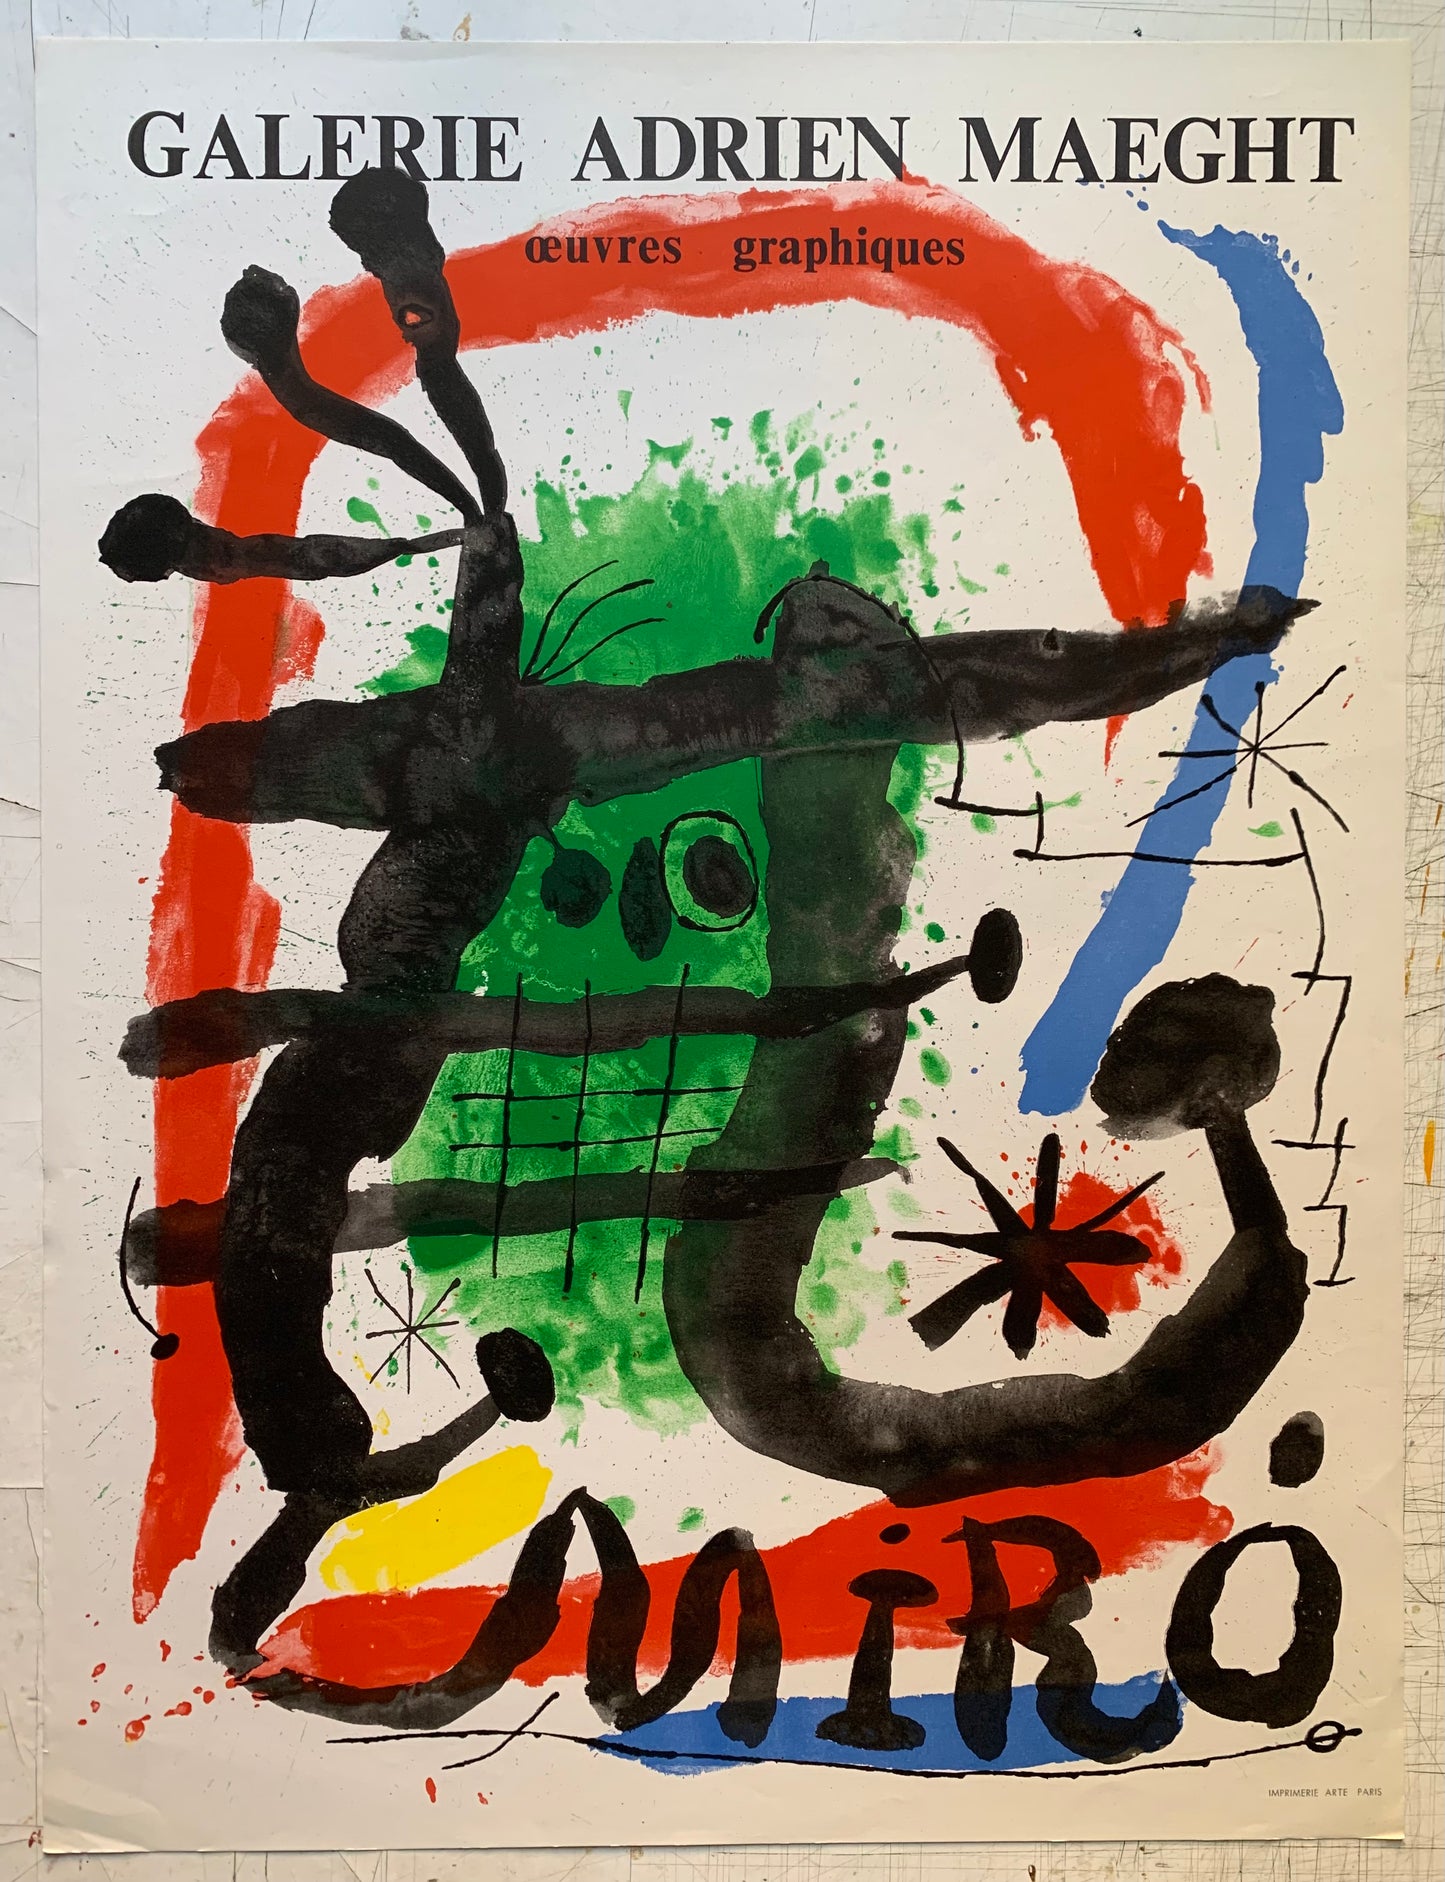 Joan Miro. "Miró - œuvres graphiques", circa 1965